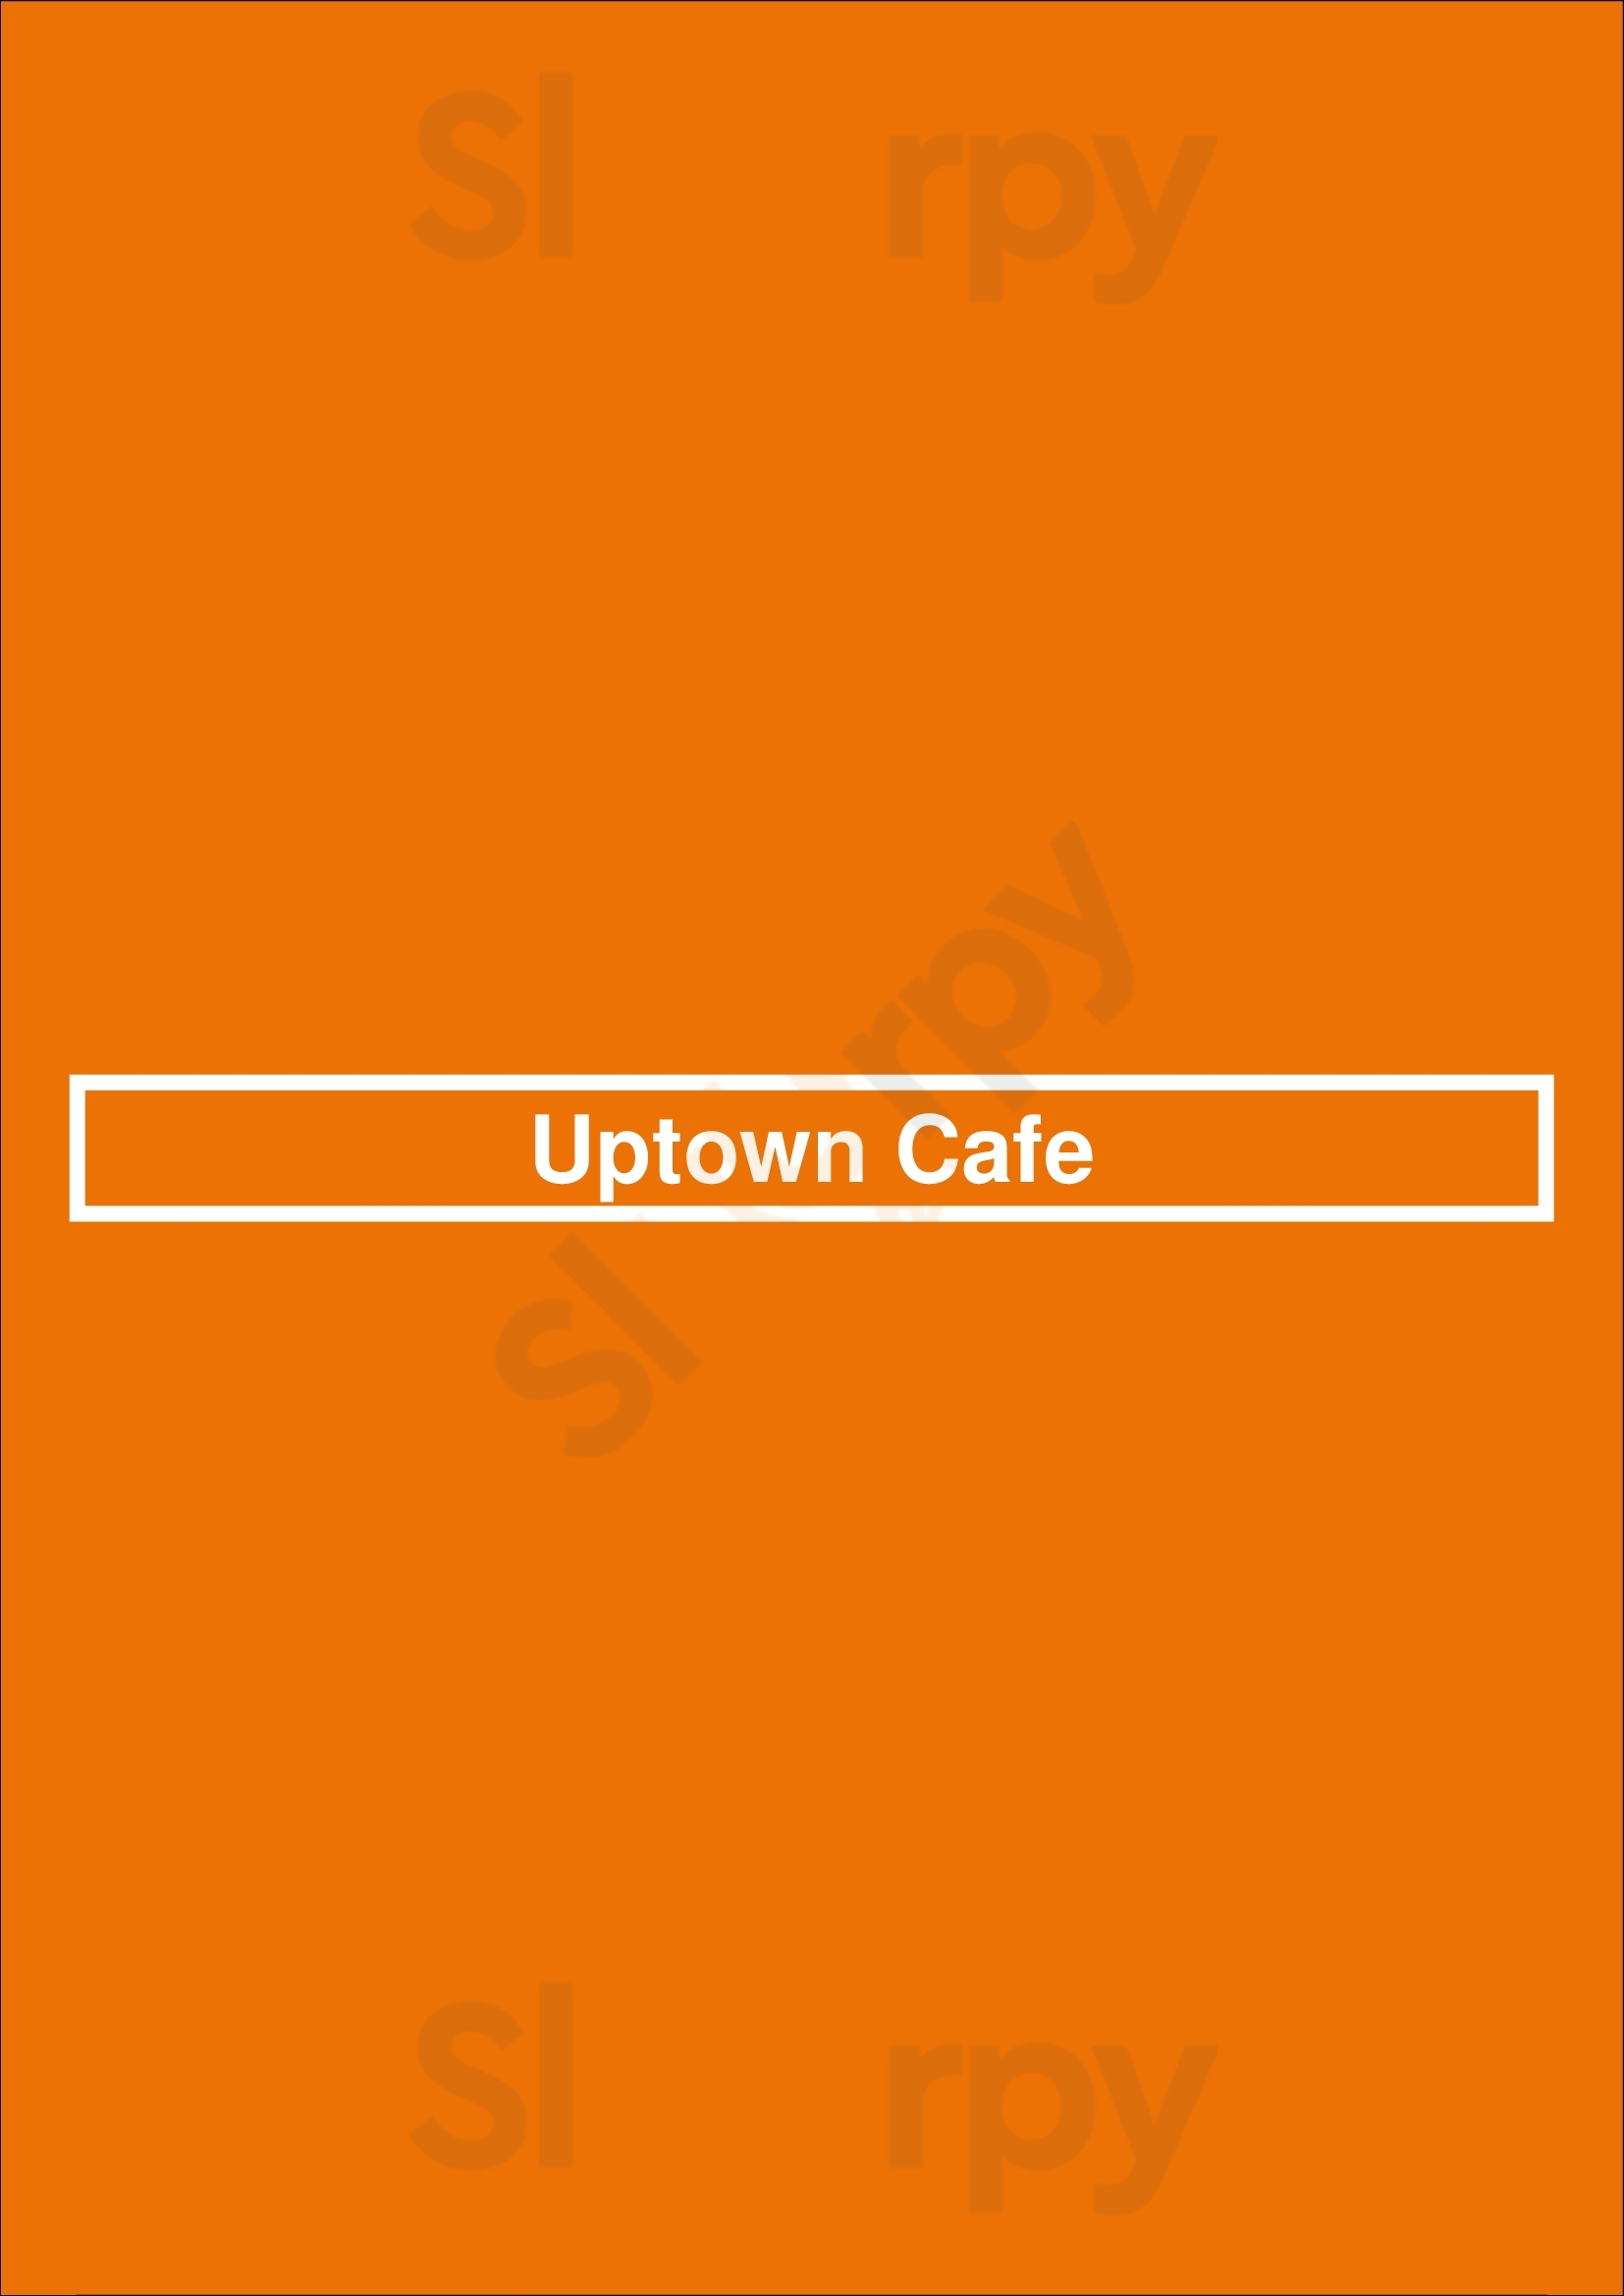 Uptown Cafe Oakland Menu - 1